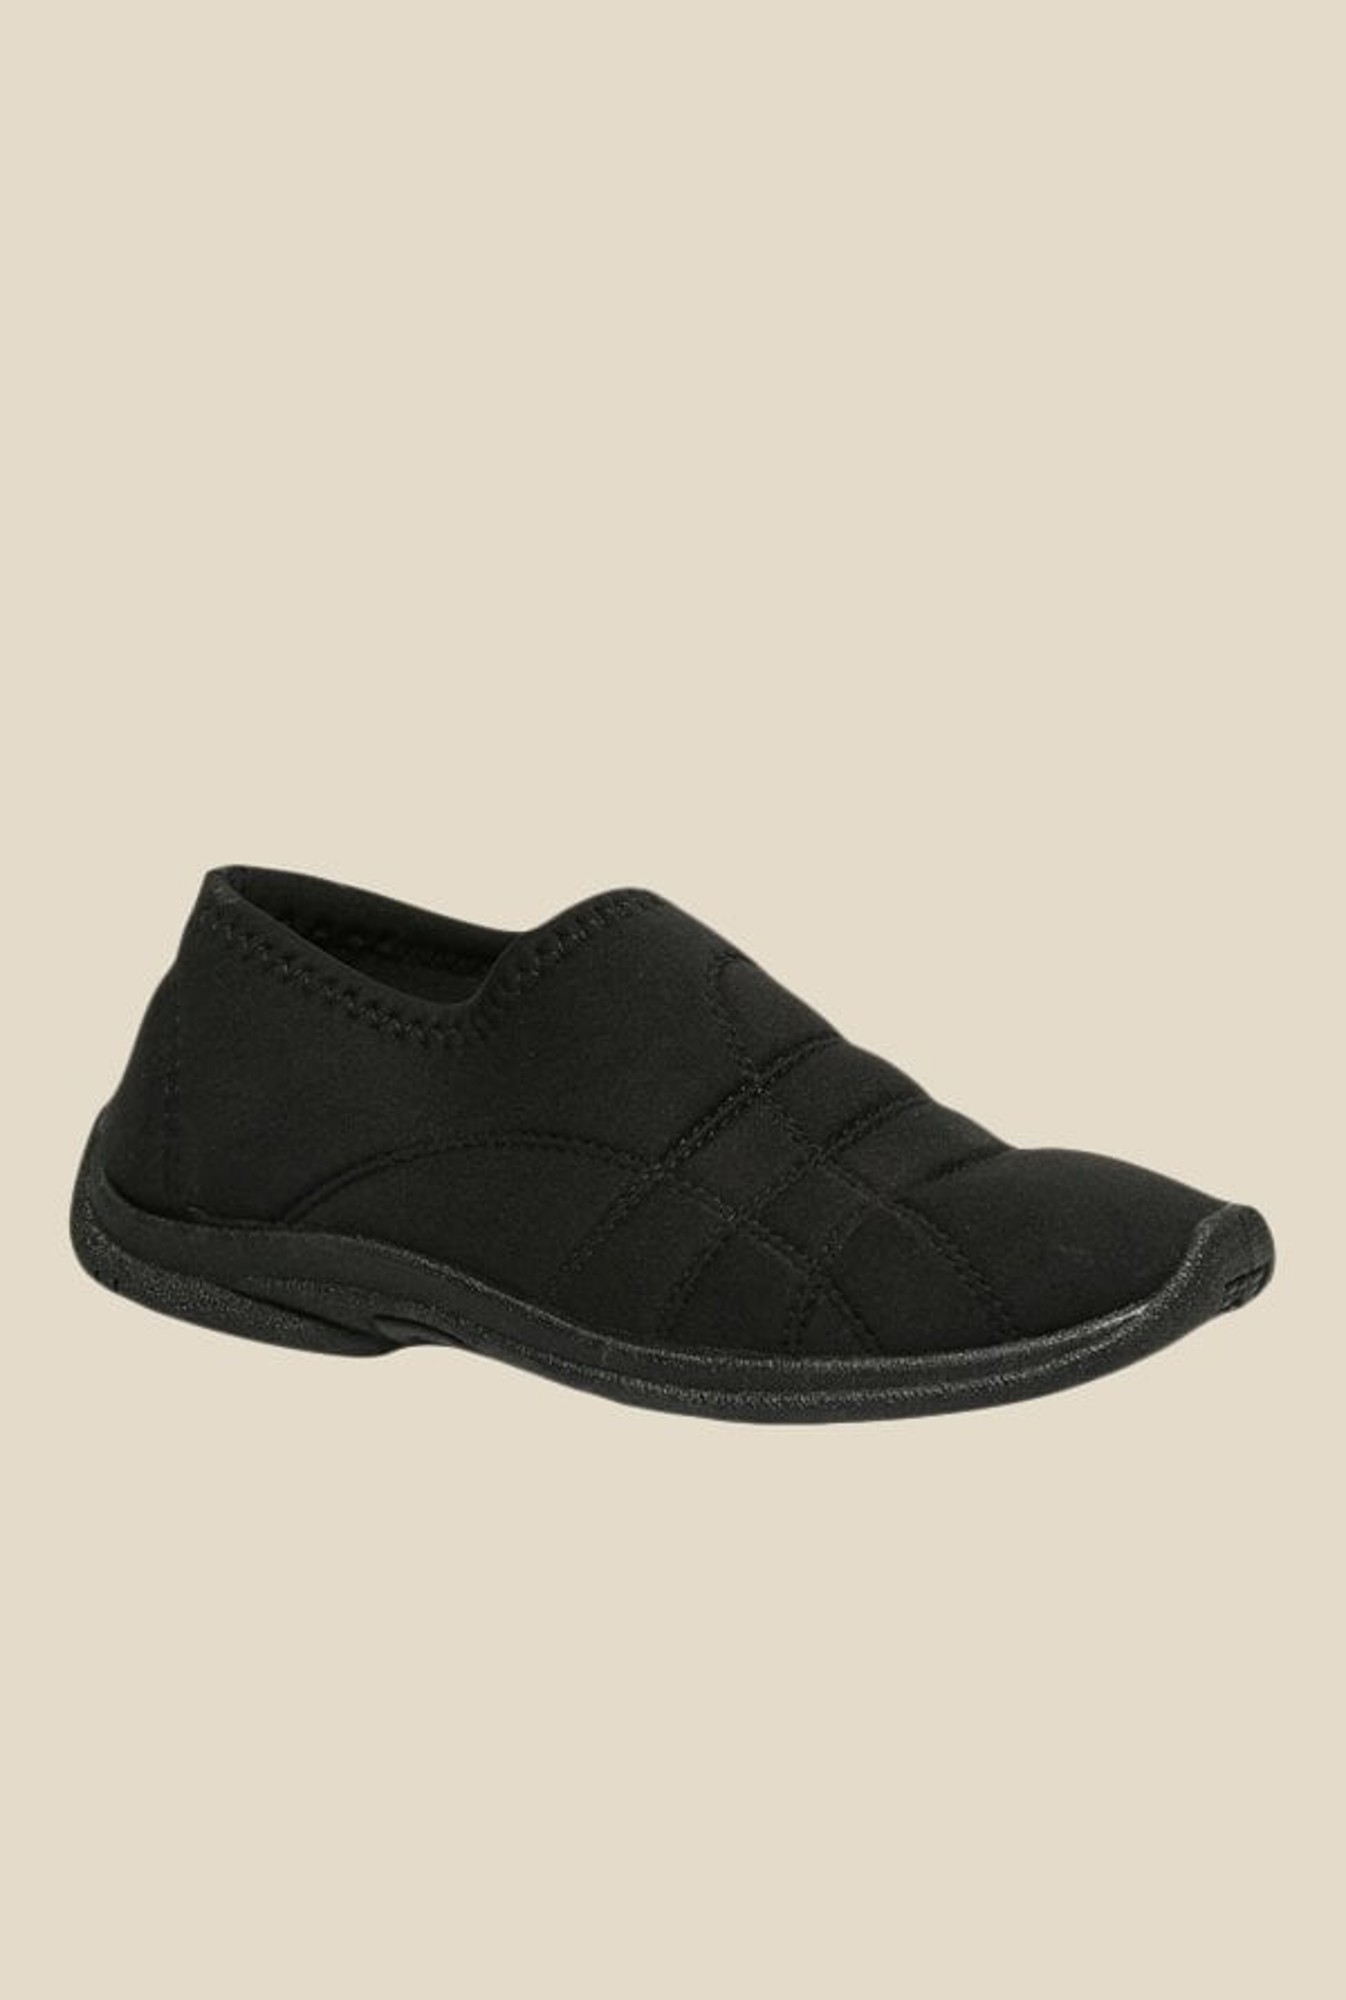 bata casual shoes online